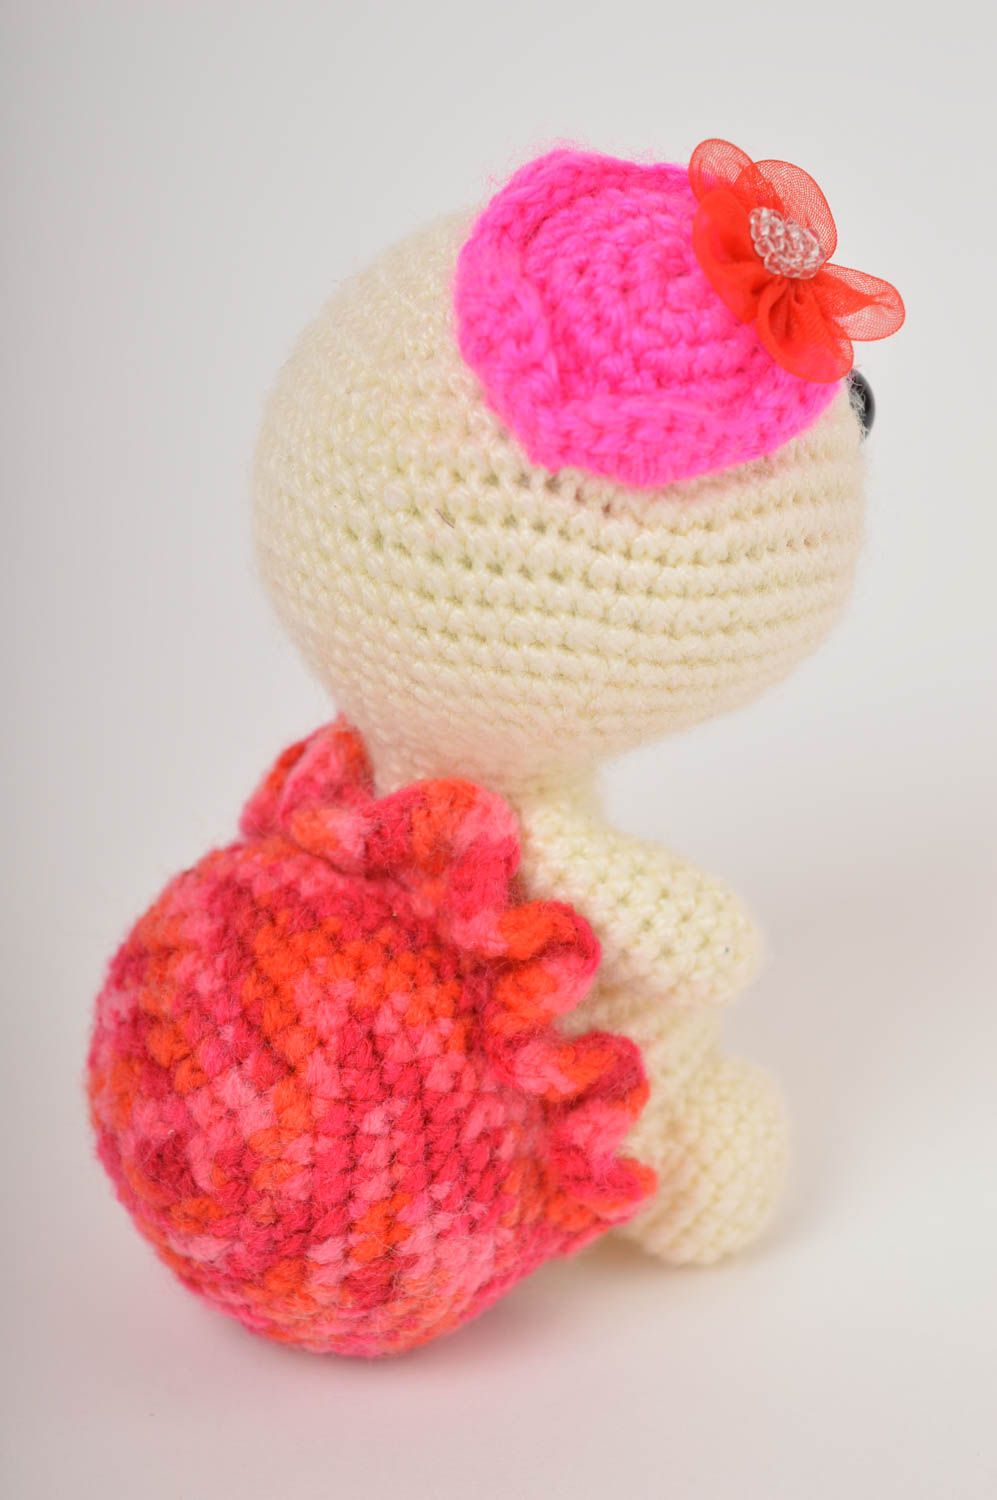 Designer beautiful toy handmade crocheted toy for babied nursery decor photo 3